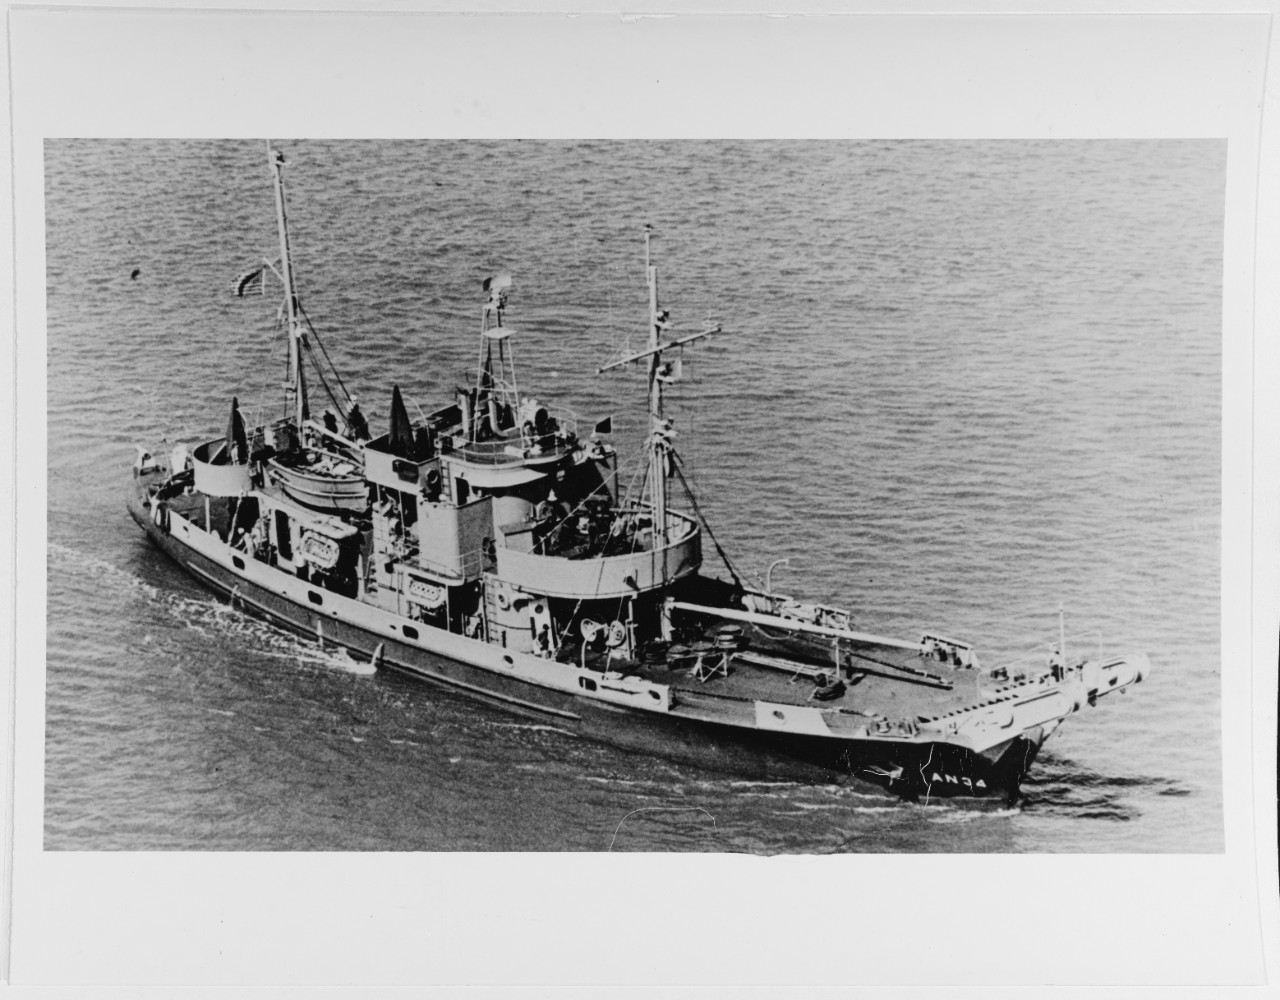 USS TEABERRY (AN -34)